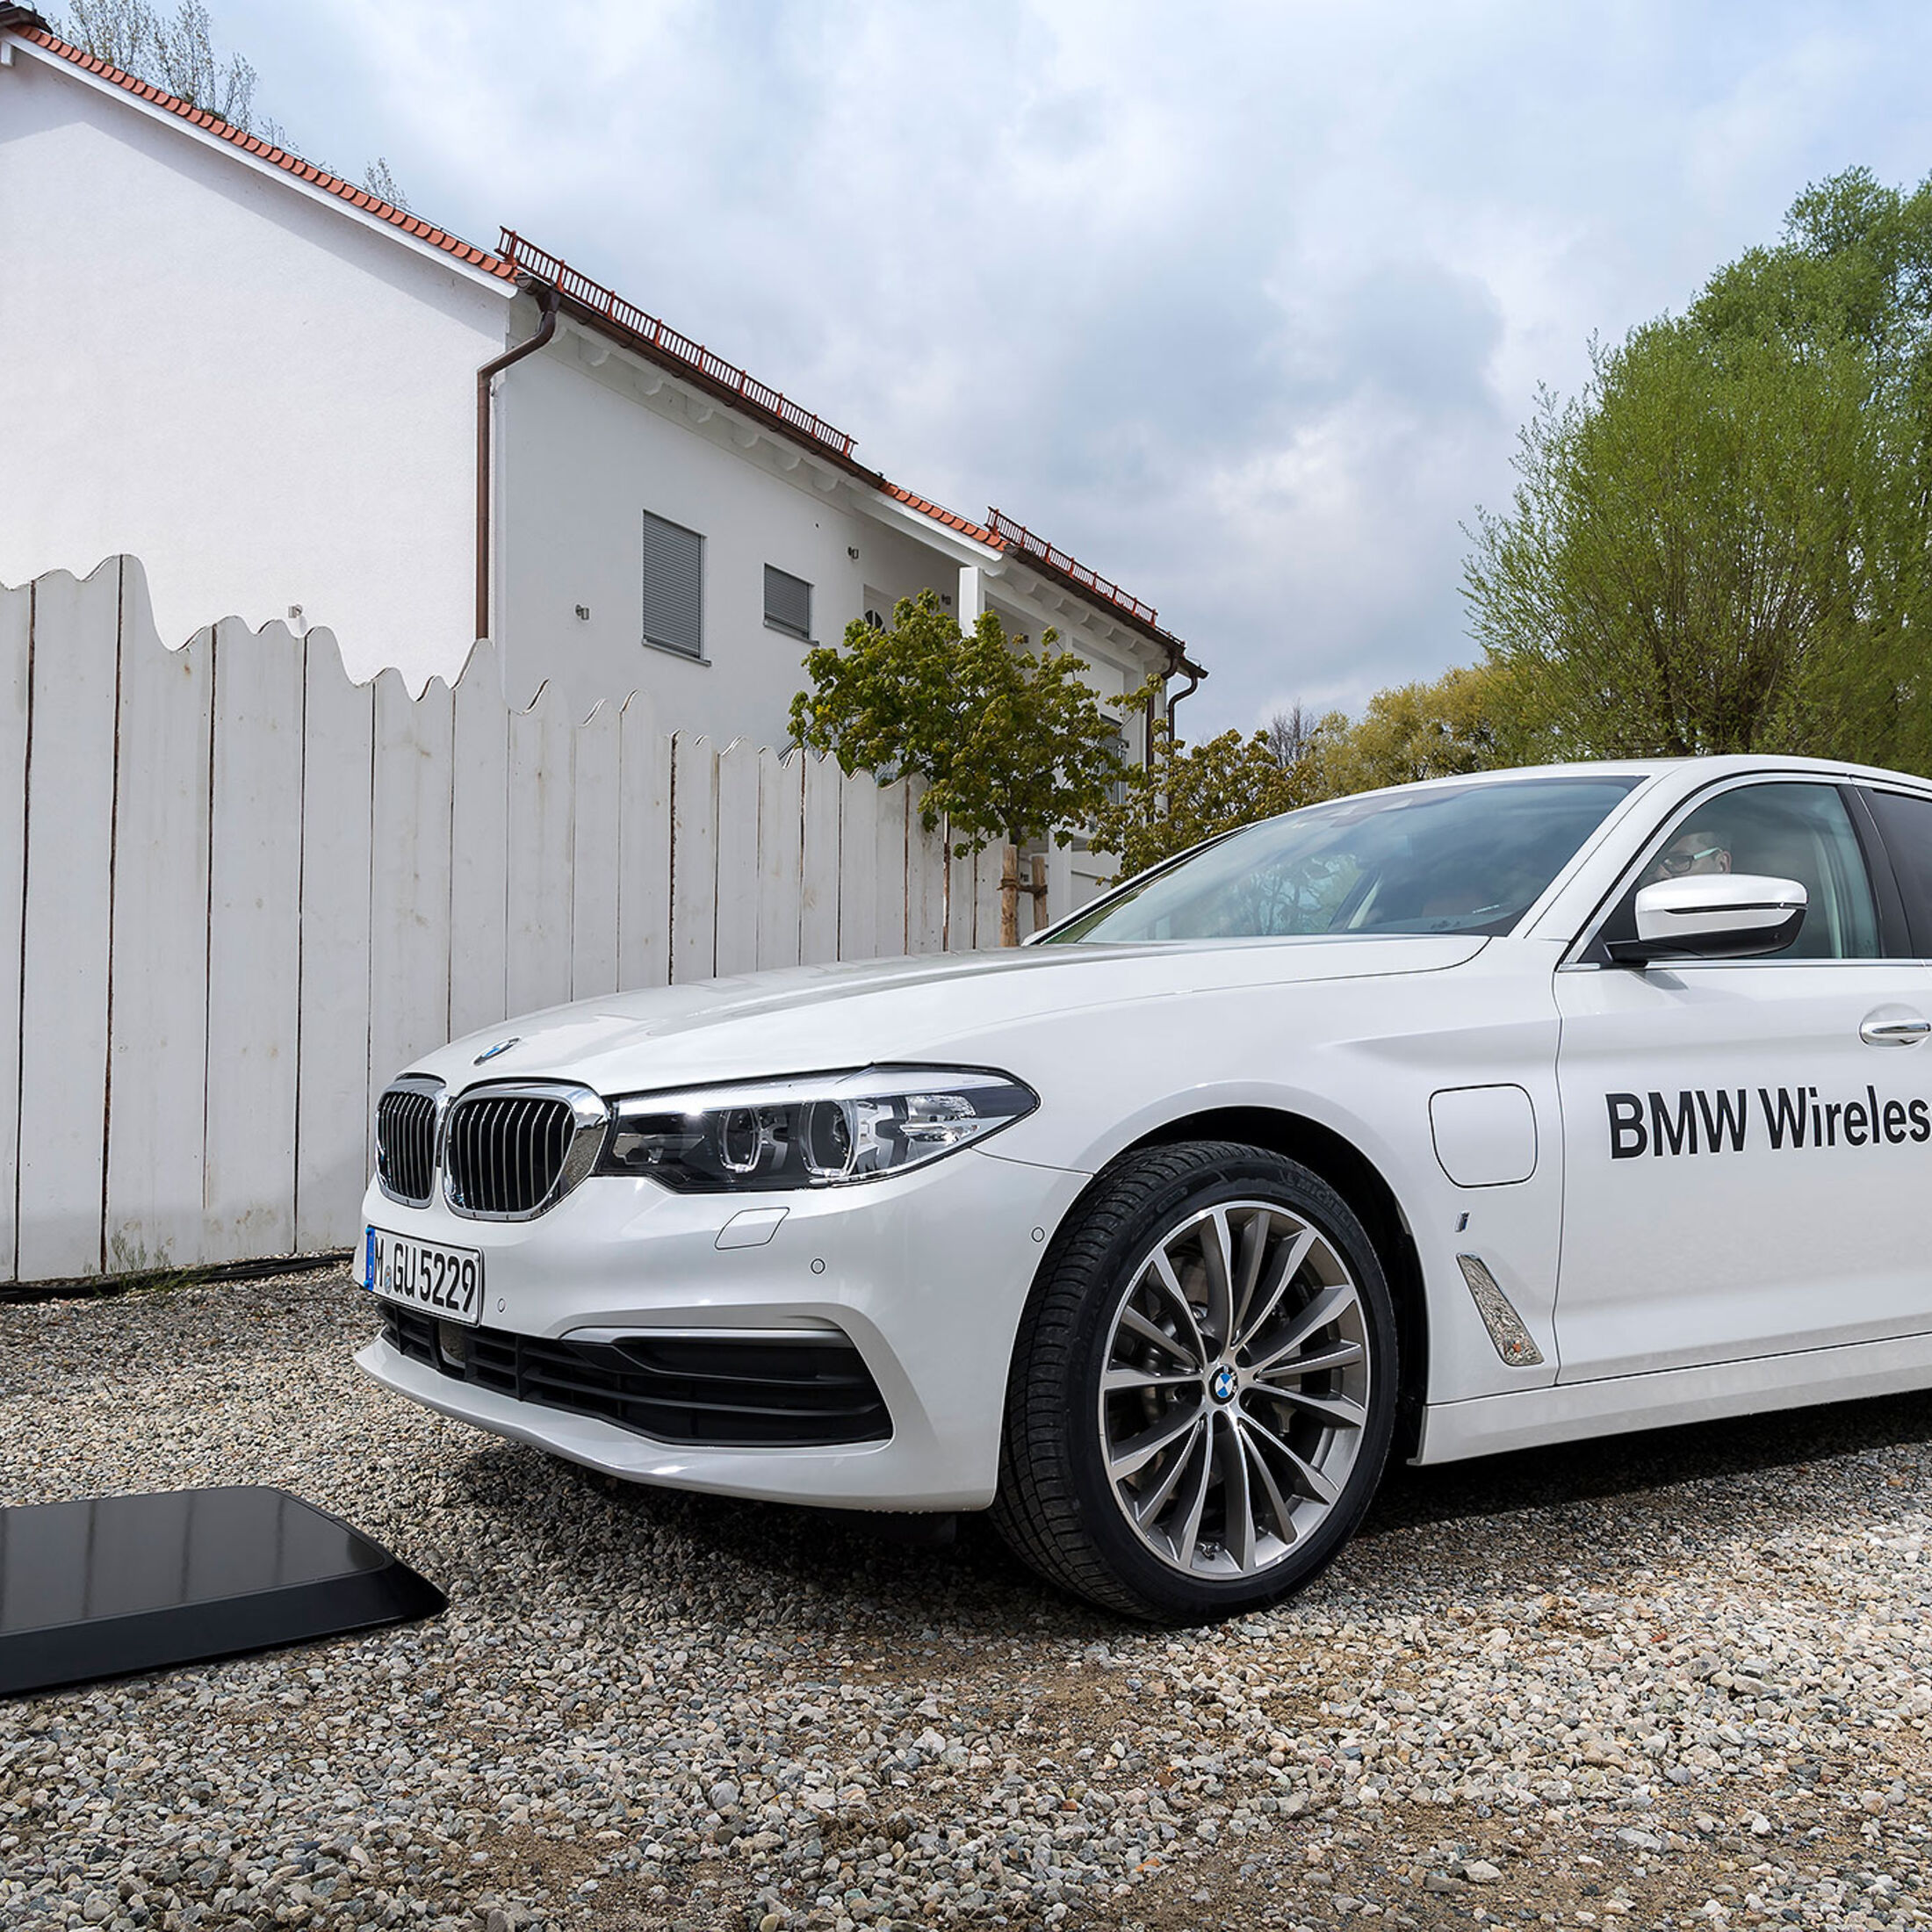 https://imgr1.auto-motor-und-sport.de/BMW-Wireless-Charging-induktives-Laden-jsonLd1x1-d9ec80b4-1166381.jpg